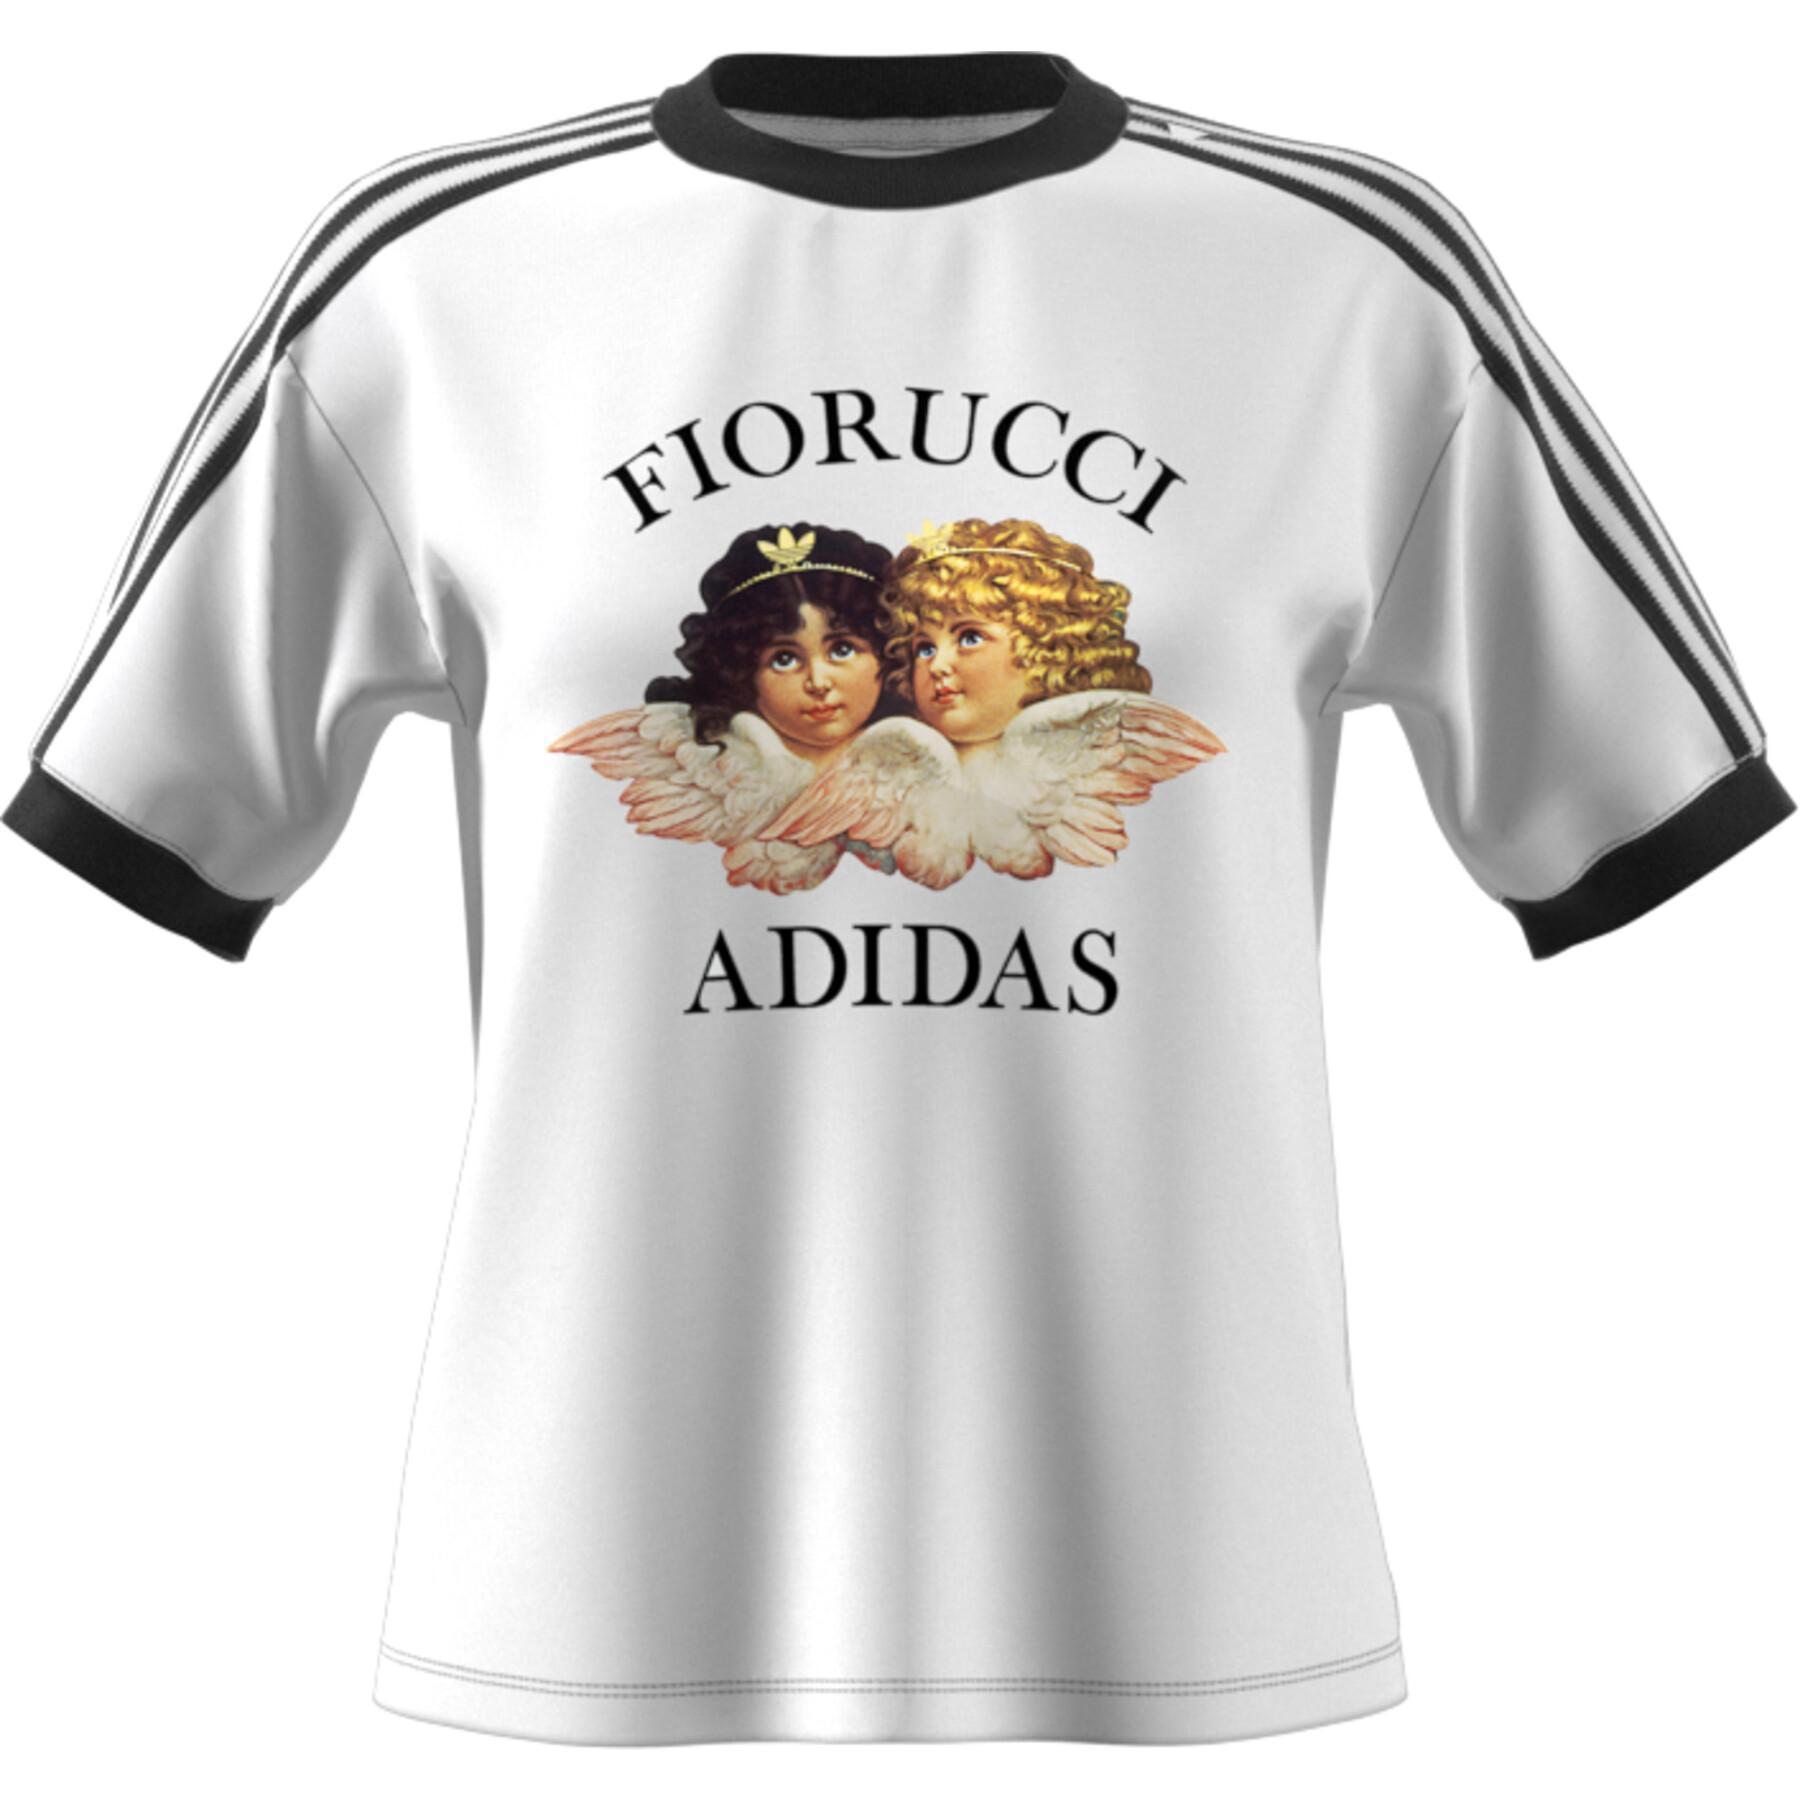 adidas fiorucci women's t-shirt